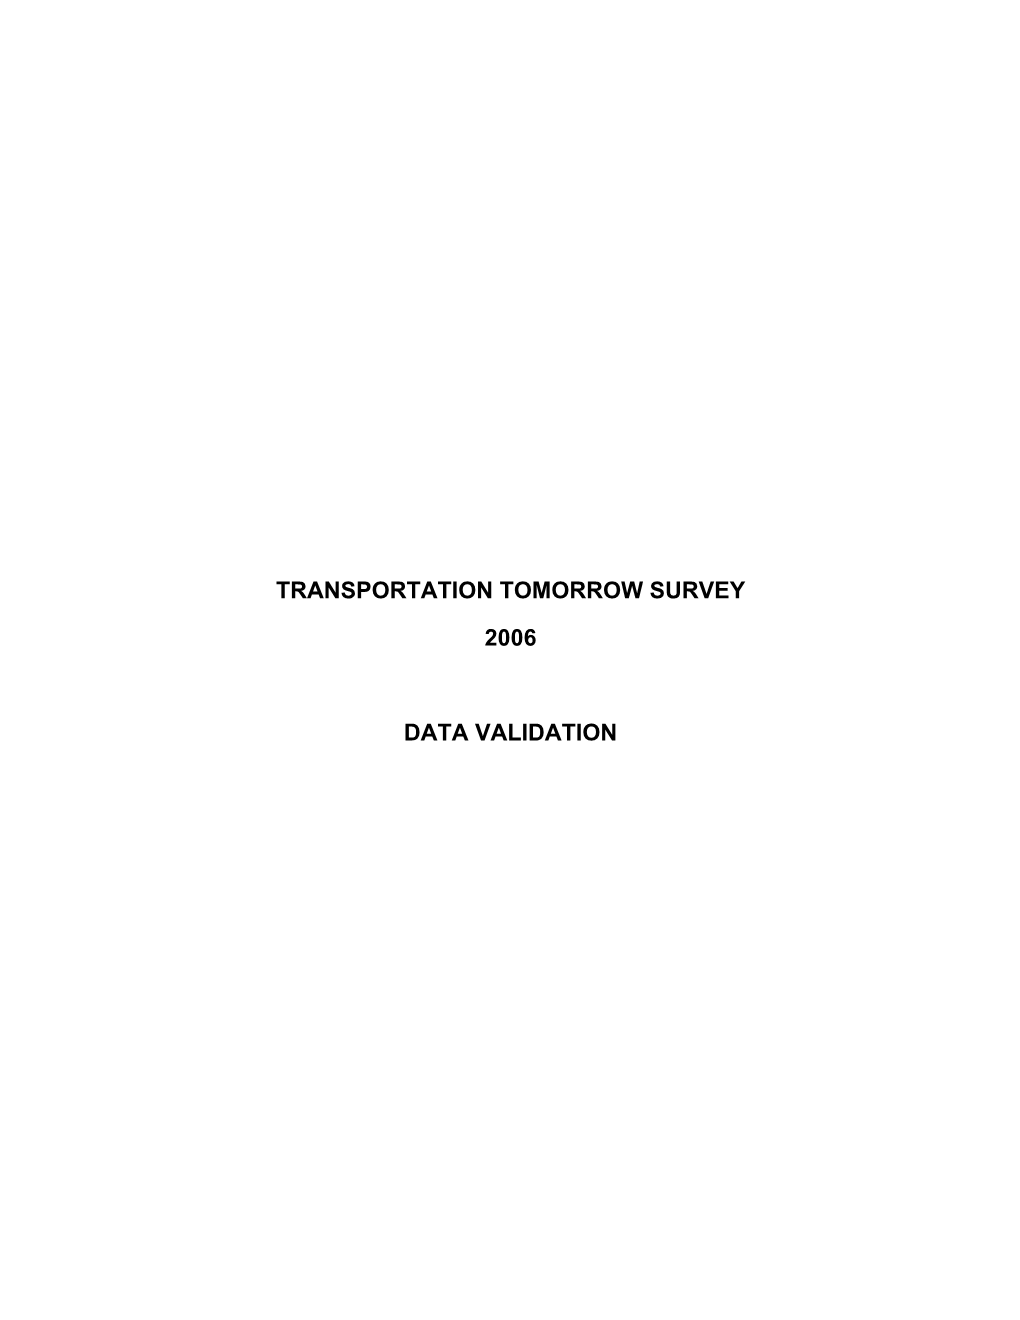 Transportation Tomorrow Survey 2006 Data Validation